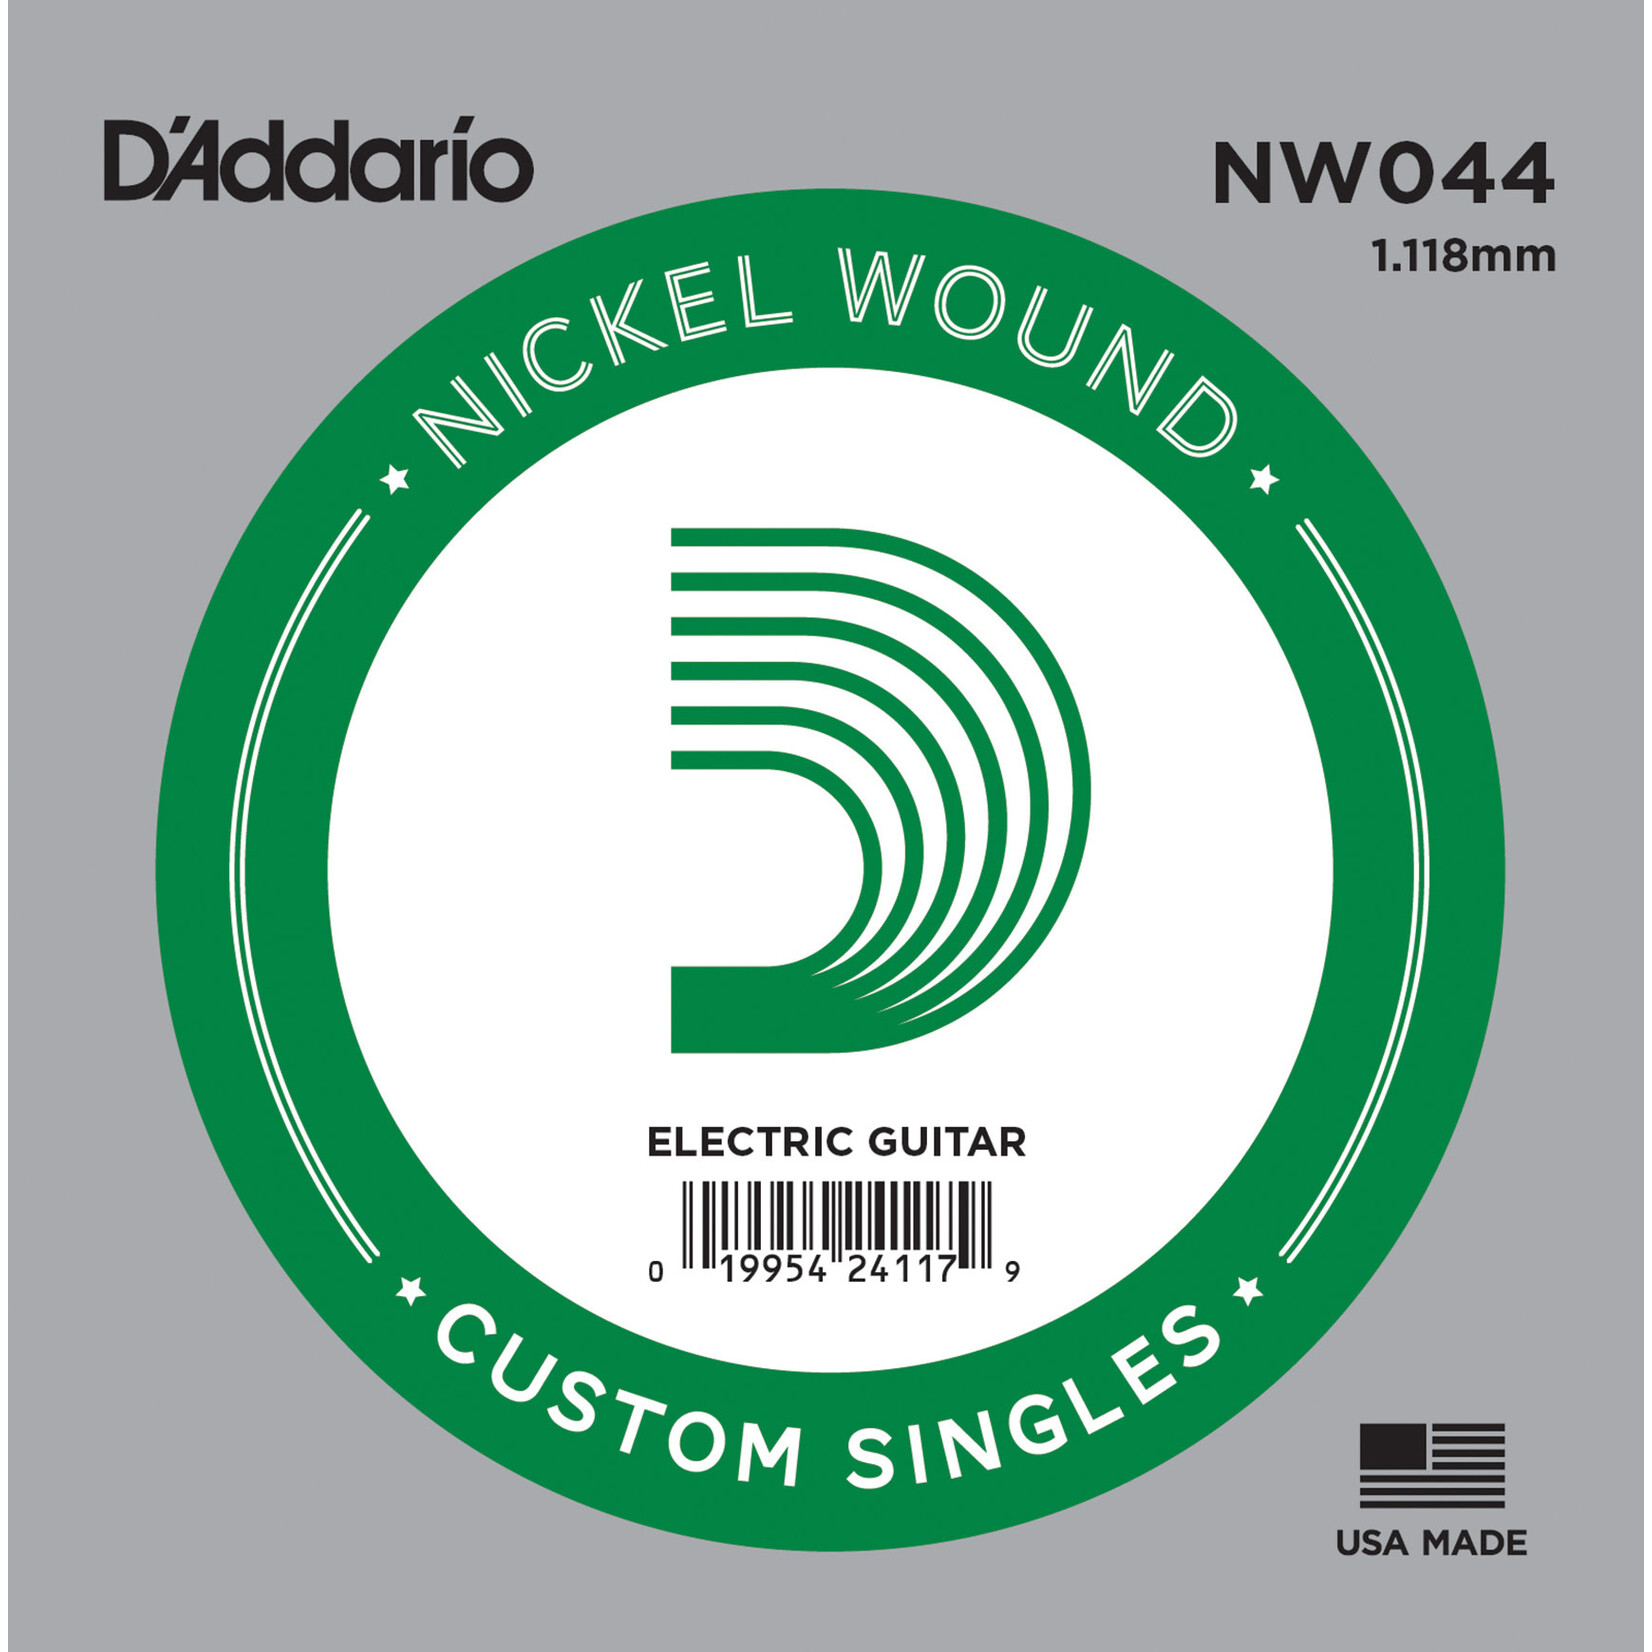 D'Addario D'Addario NW044 Nickel Wound Electric Guitar Single String .044